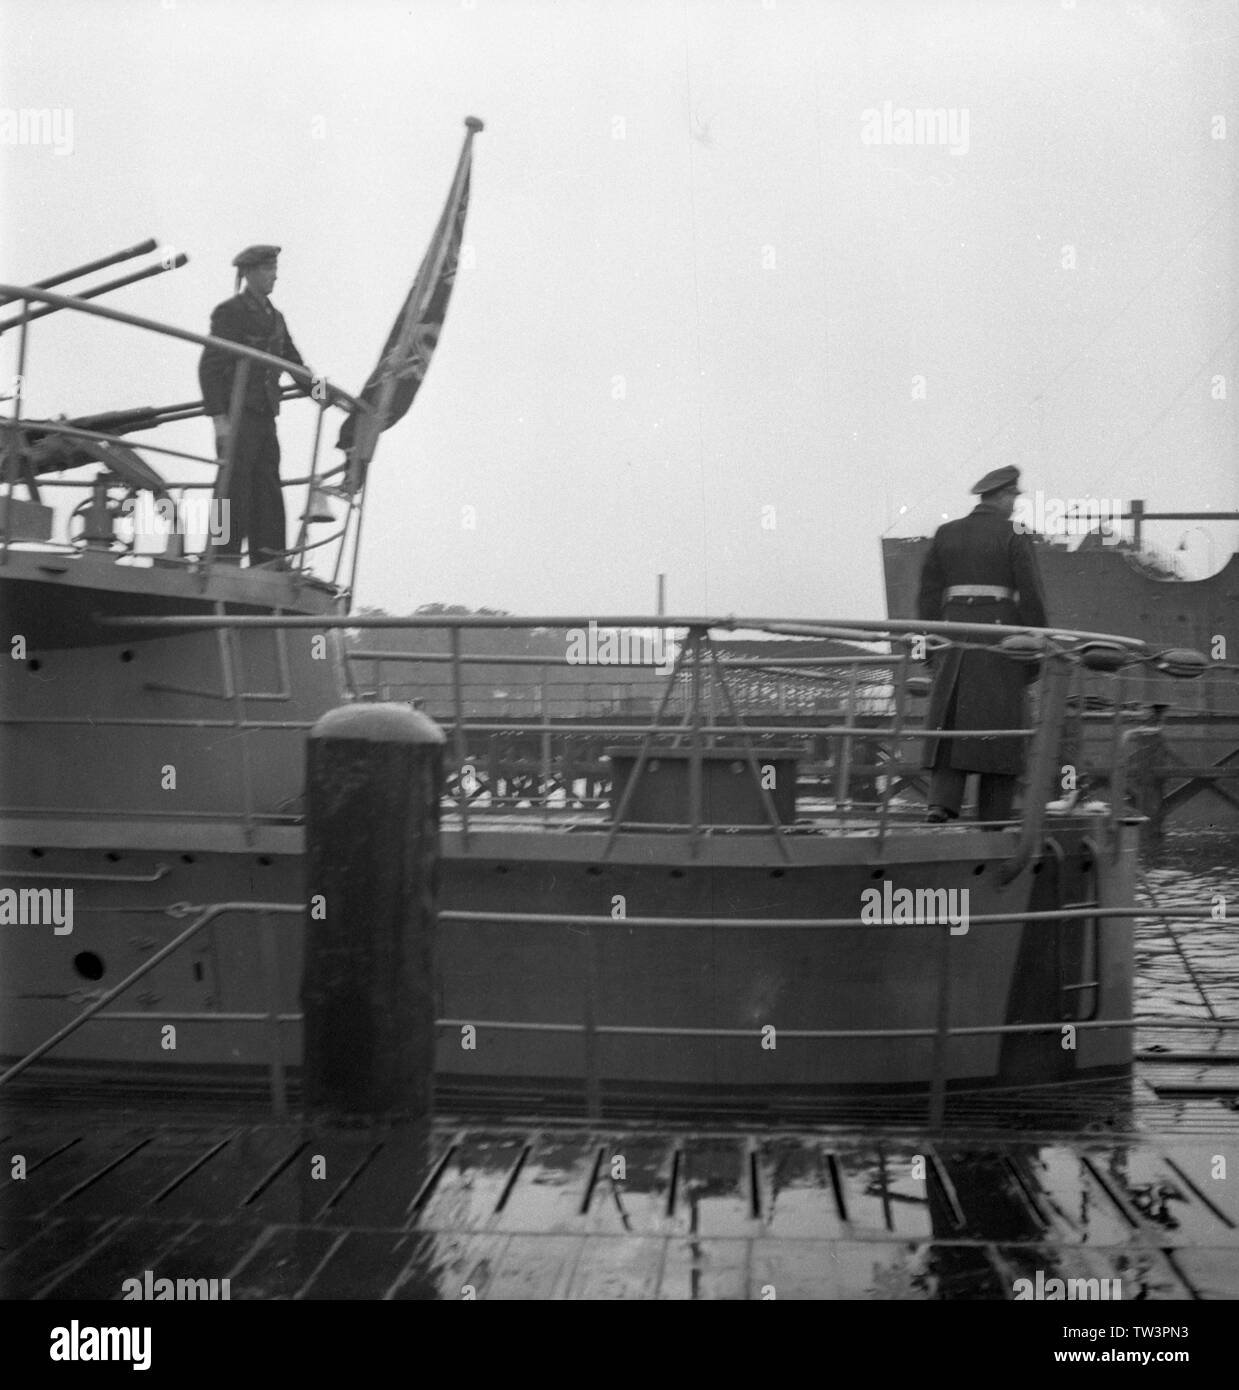 Wehrmacht Unterseeboot U-Boot des Typs VII C U 1058 Indienststellung 1944 - Marine de guerre de l'Allemagne nazie sous-marin type VII C Mise en service U1058 1944 Banque D'Images